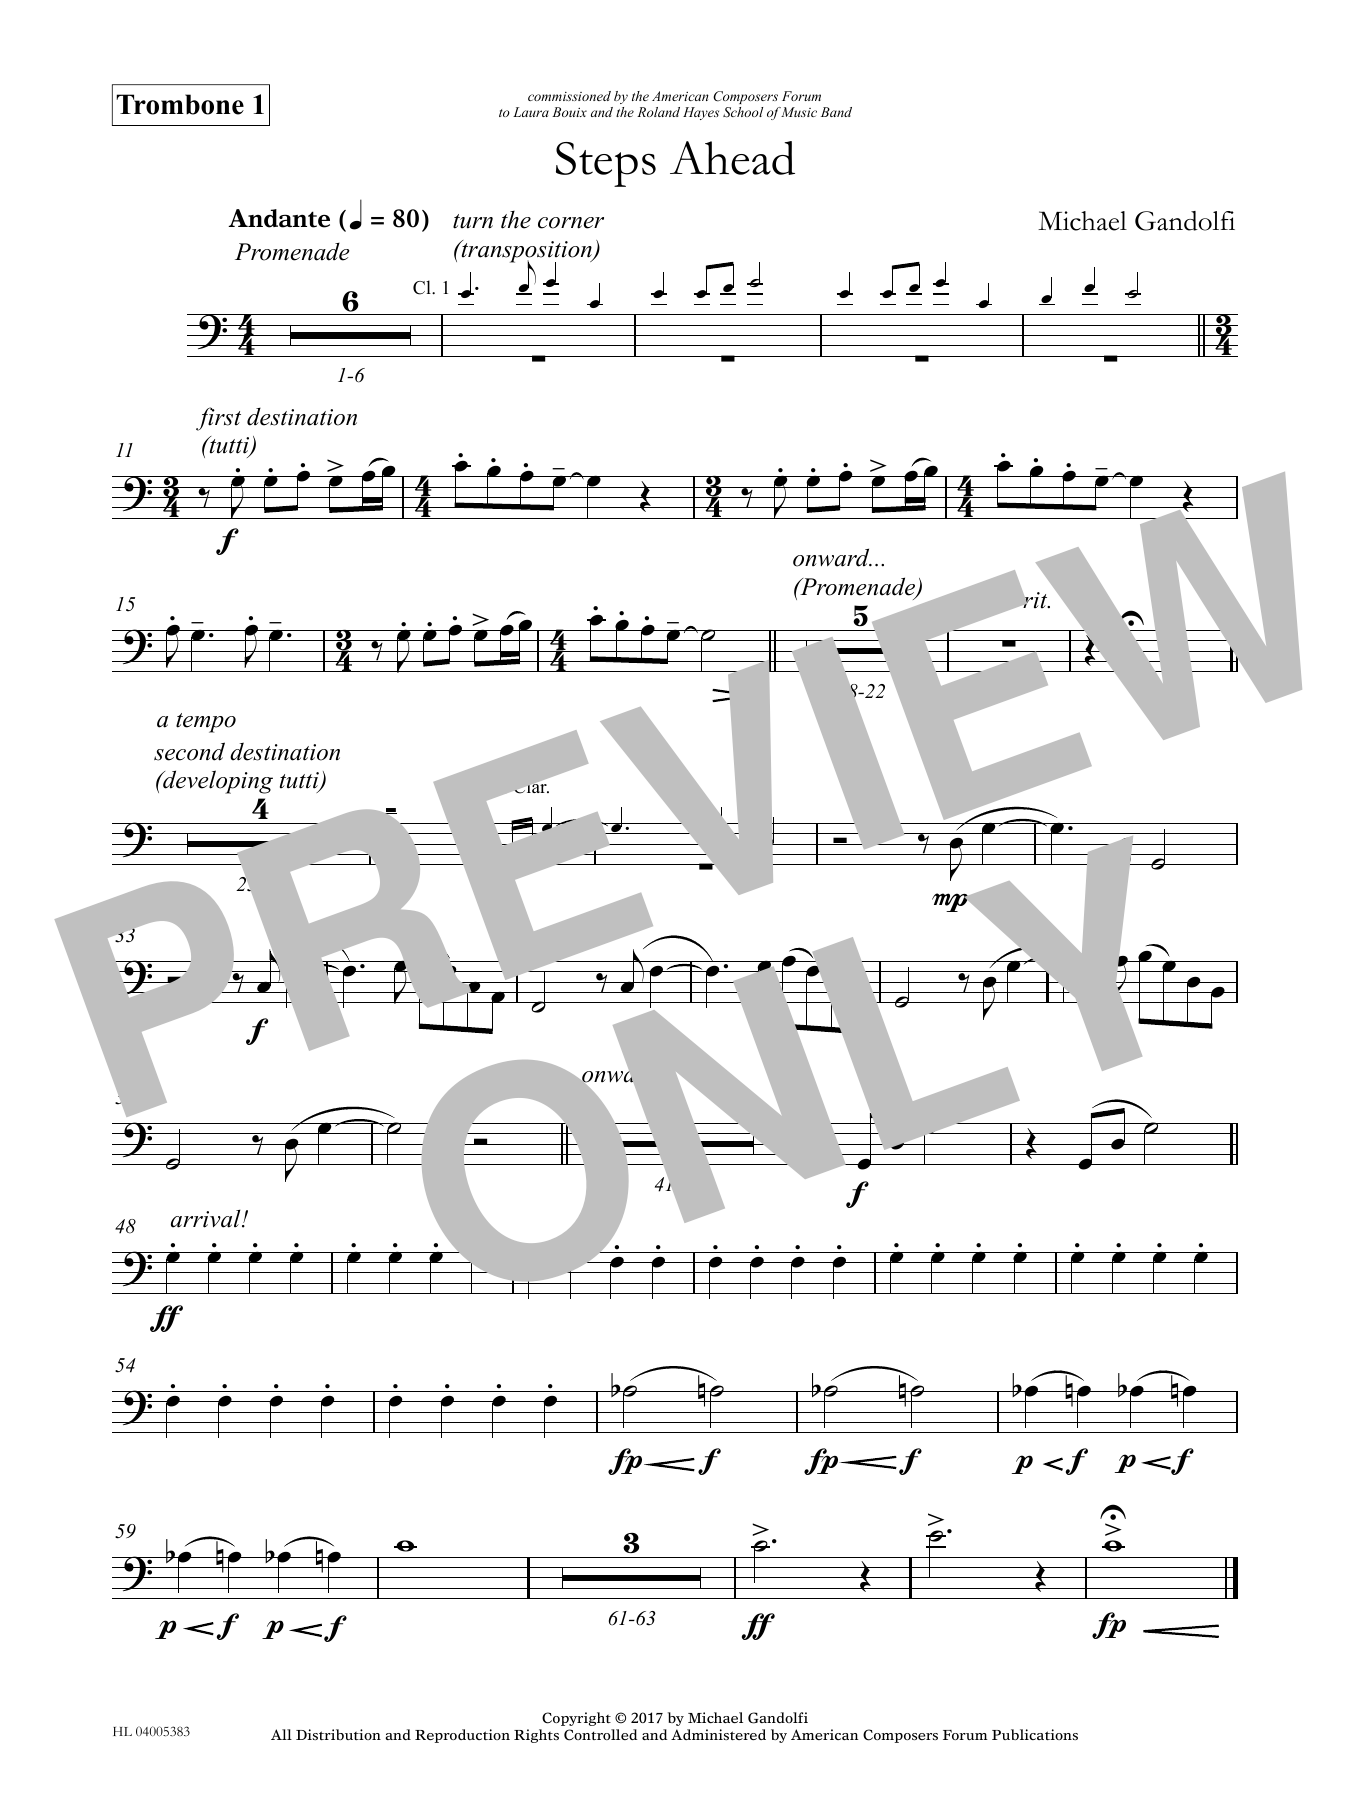 Download Michael Gandolfi Steps Ahead - Trombone 1 Sheet Music